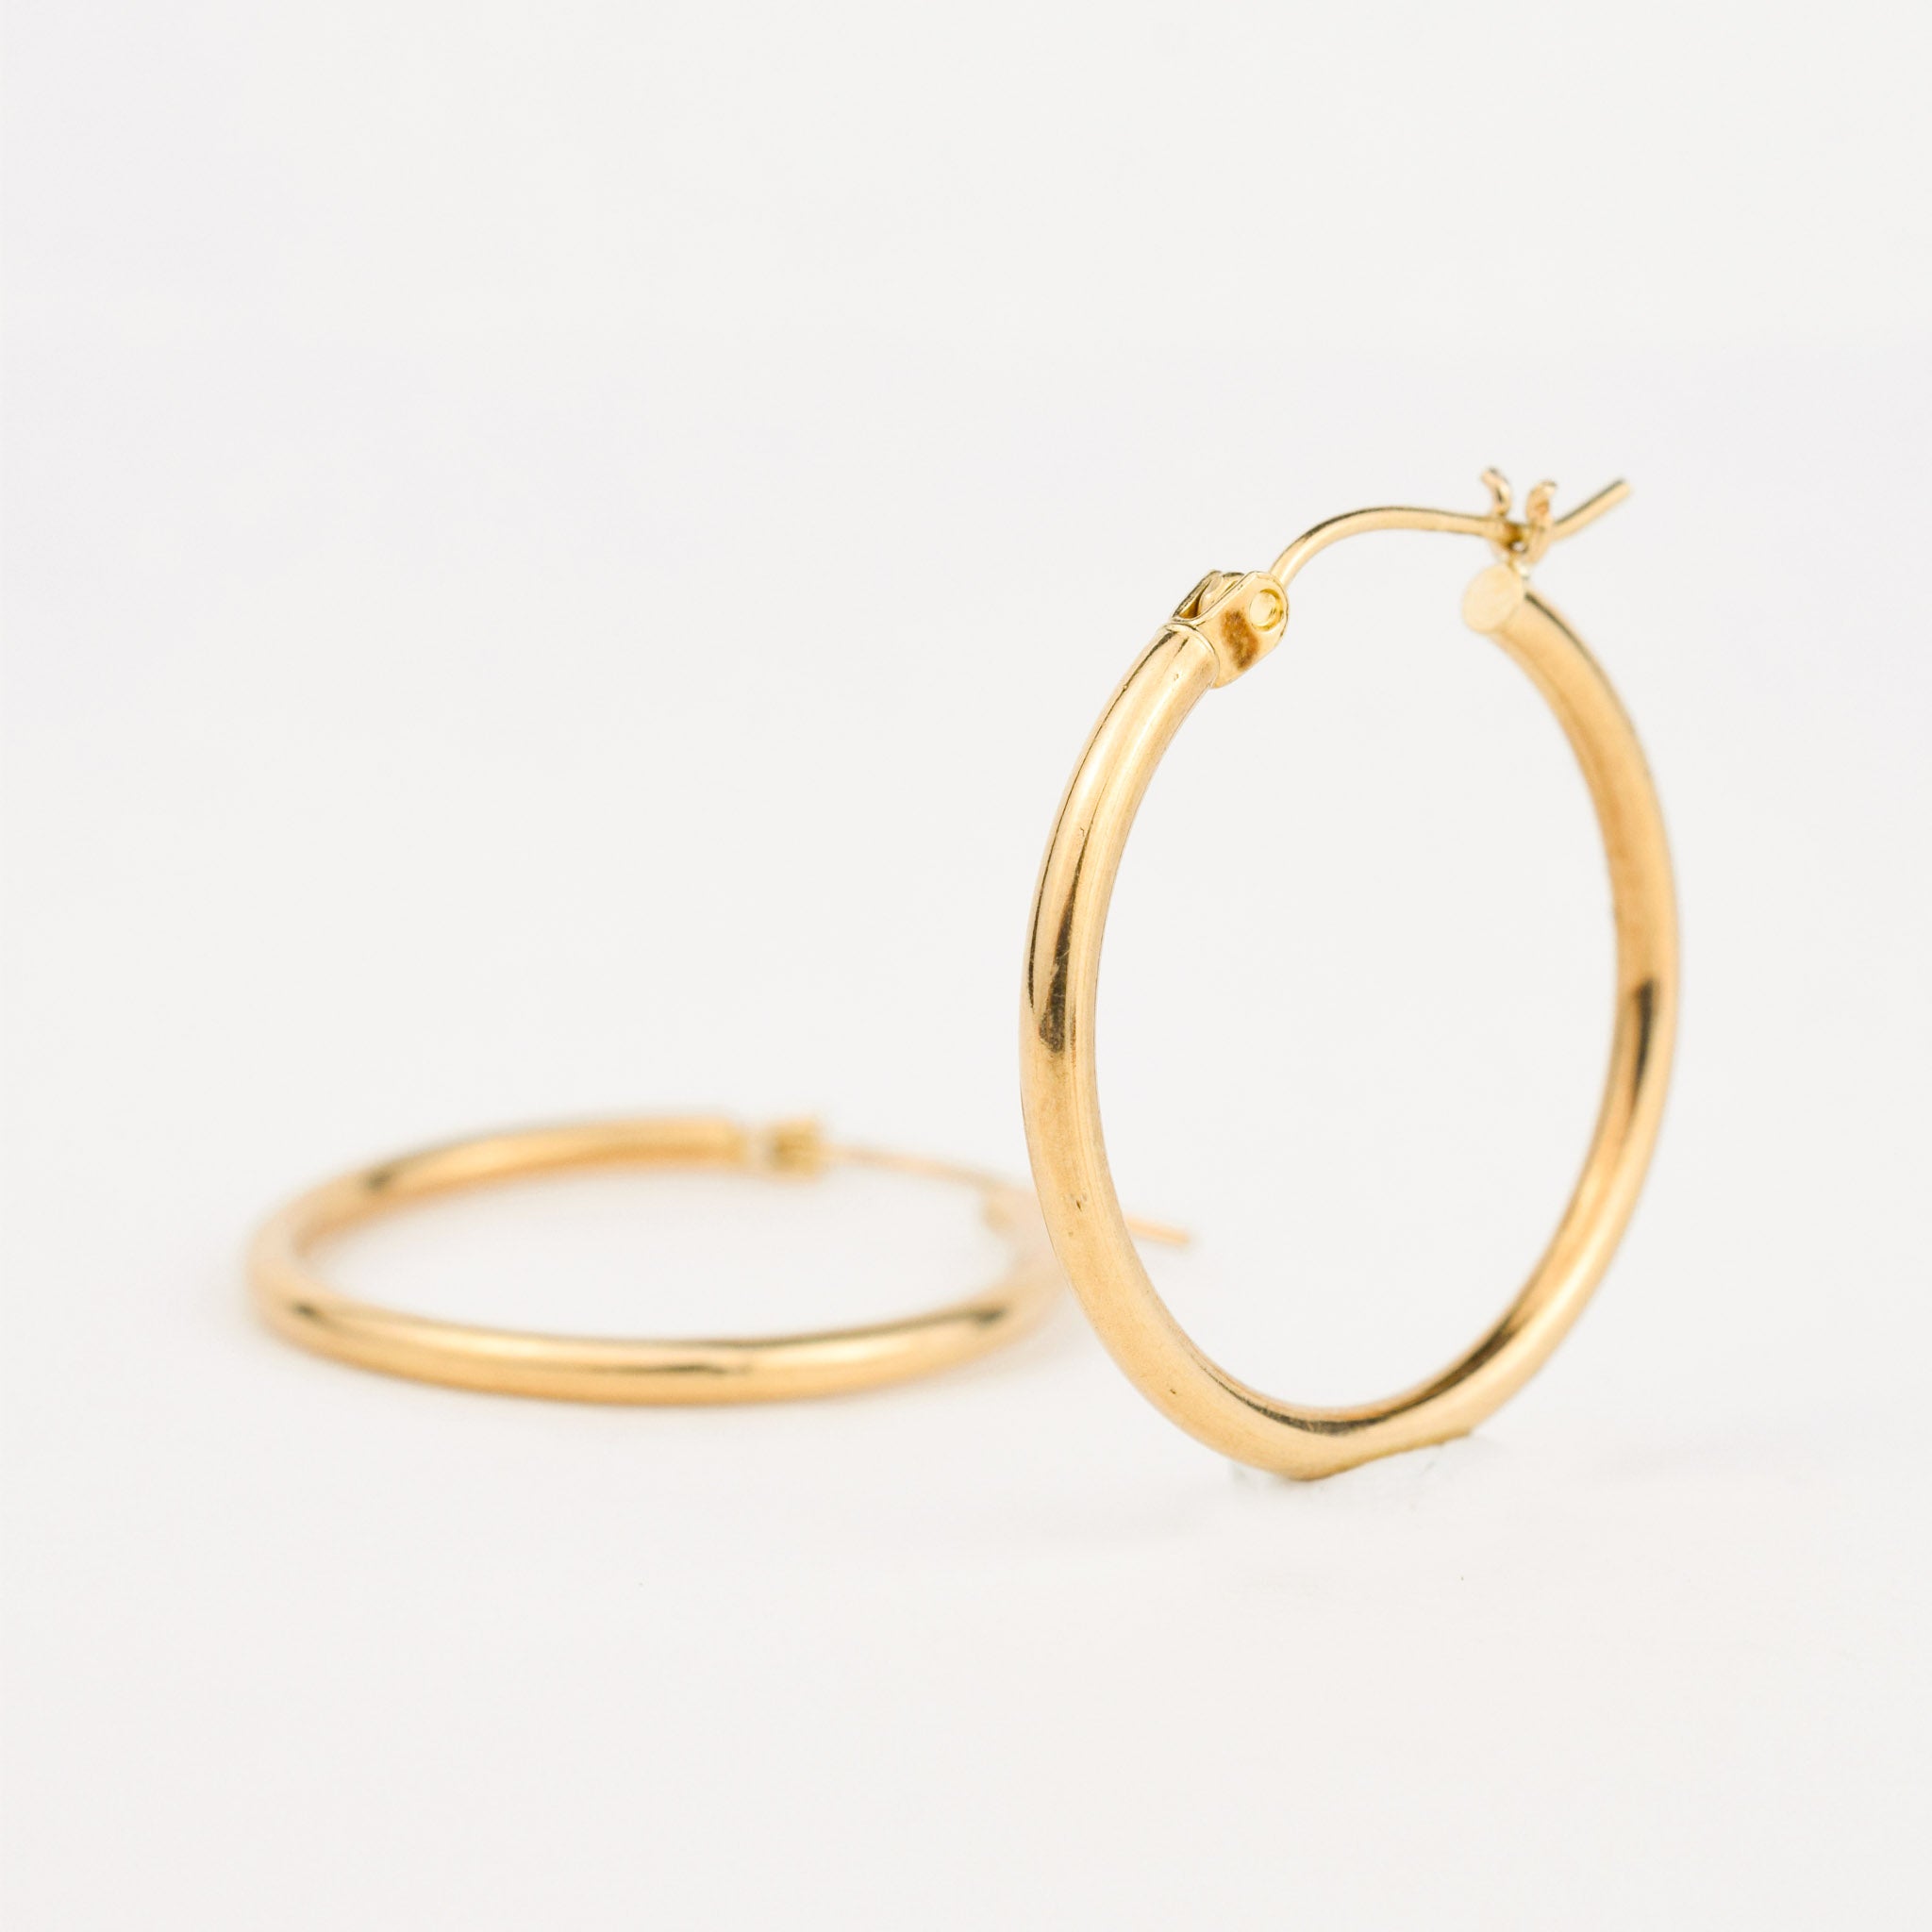 10k yellow gold 25mm hoop earrings 